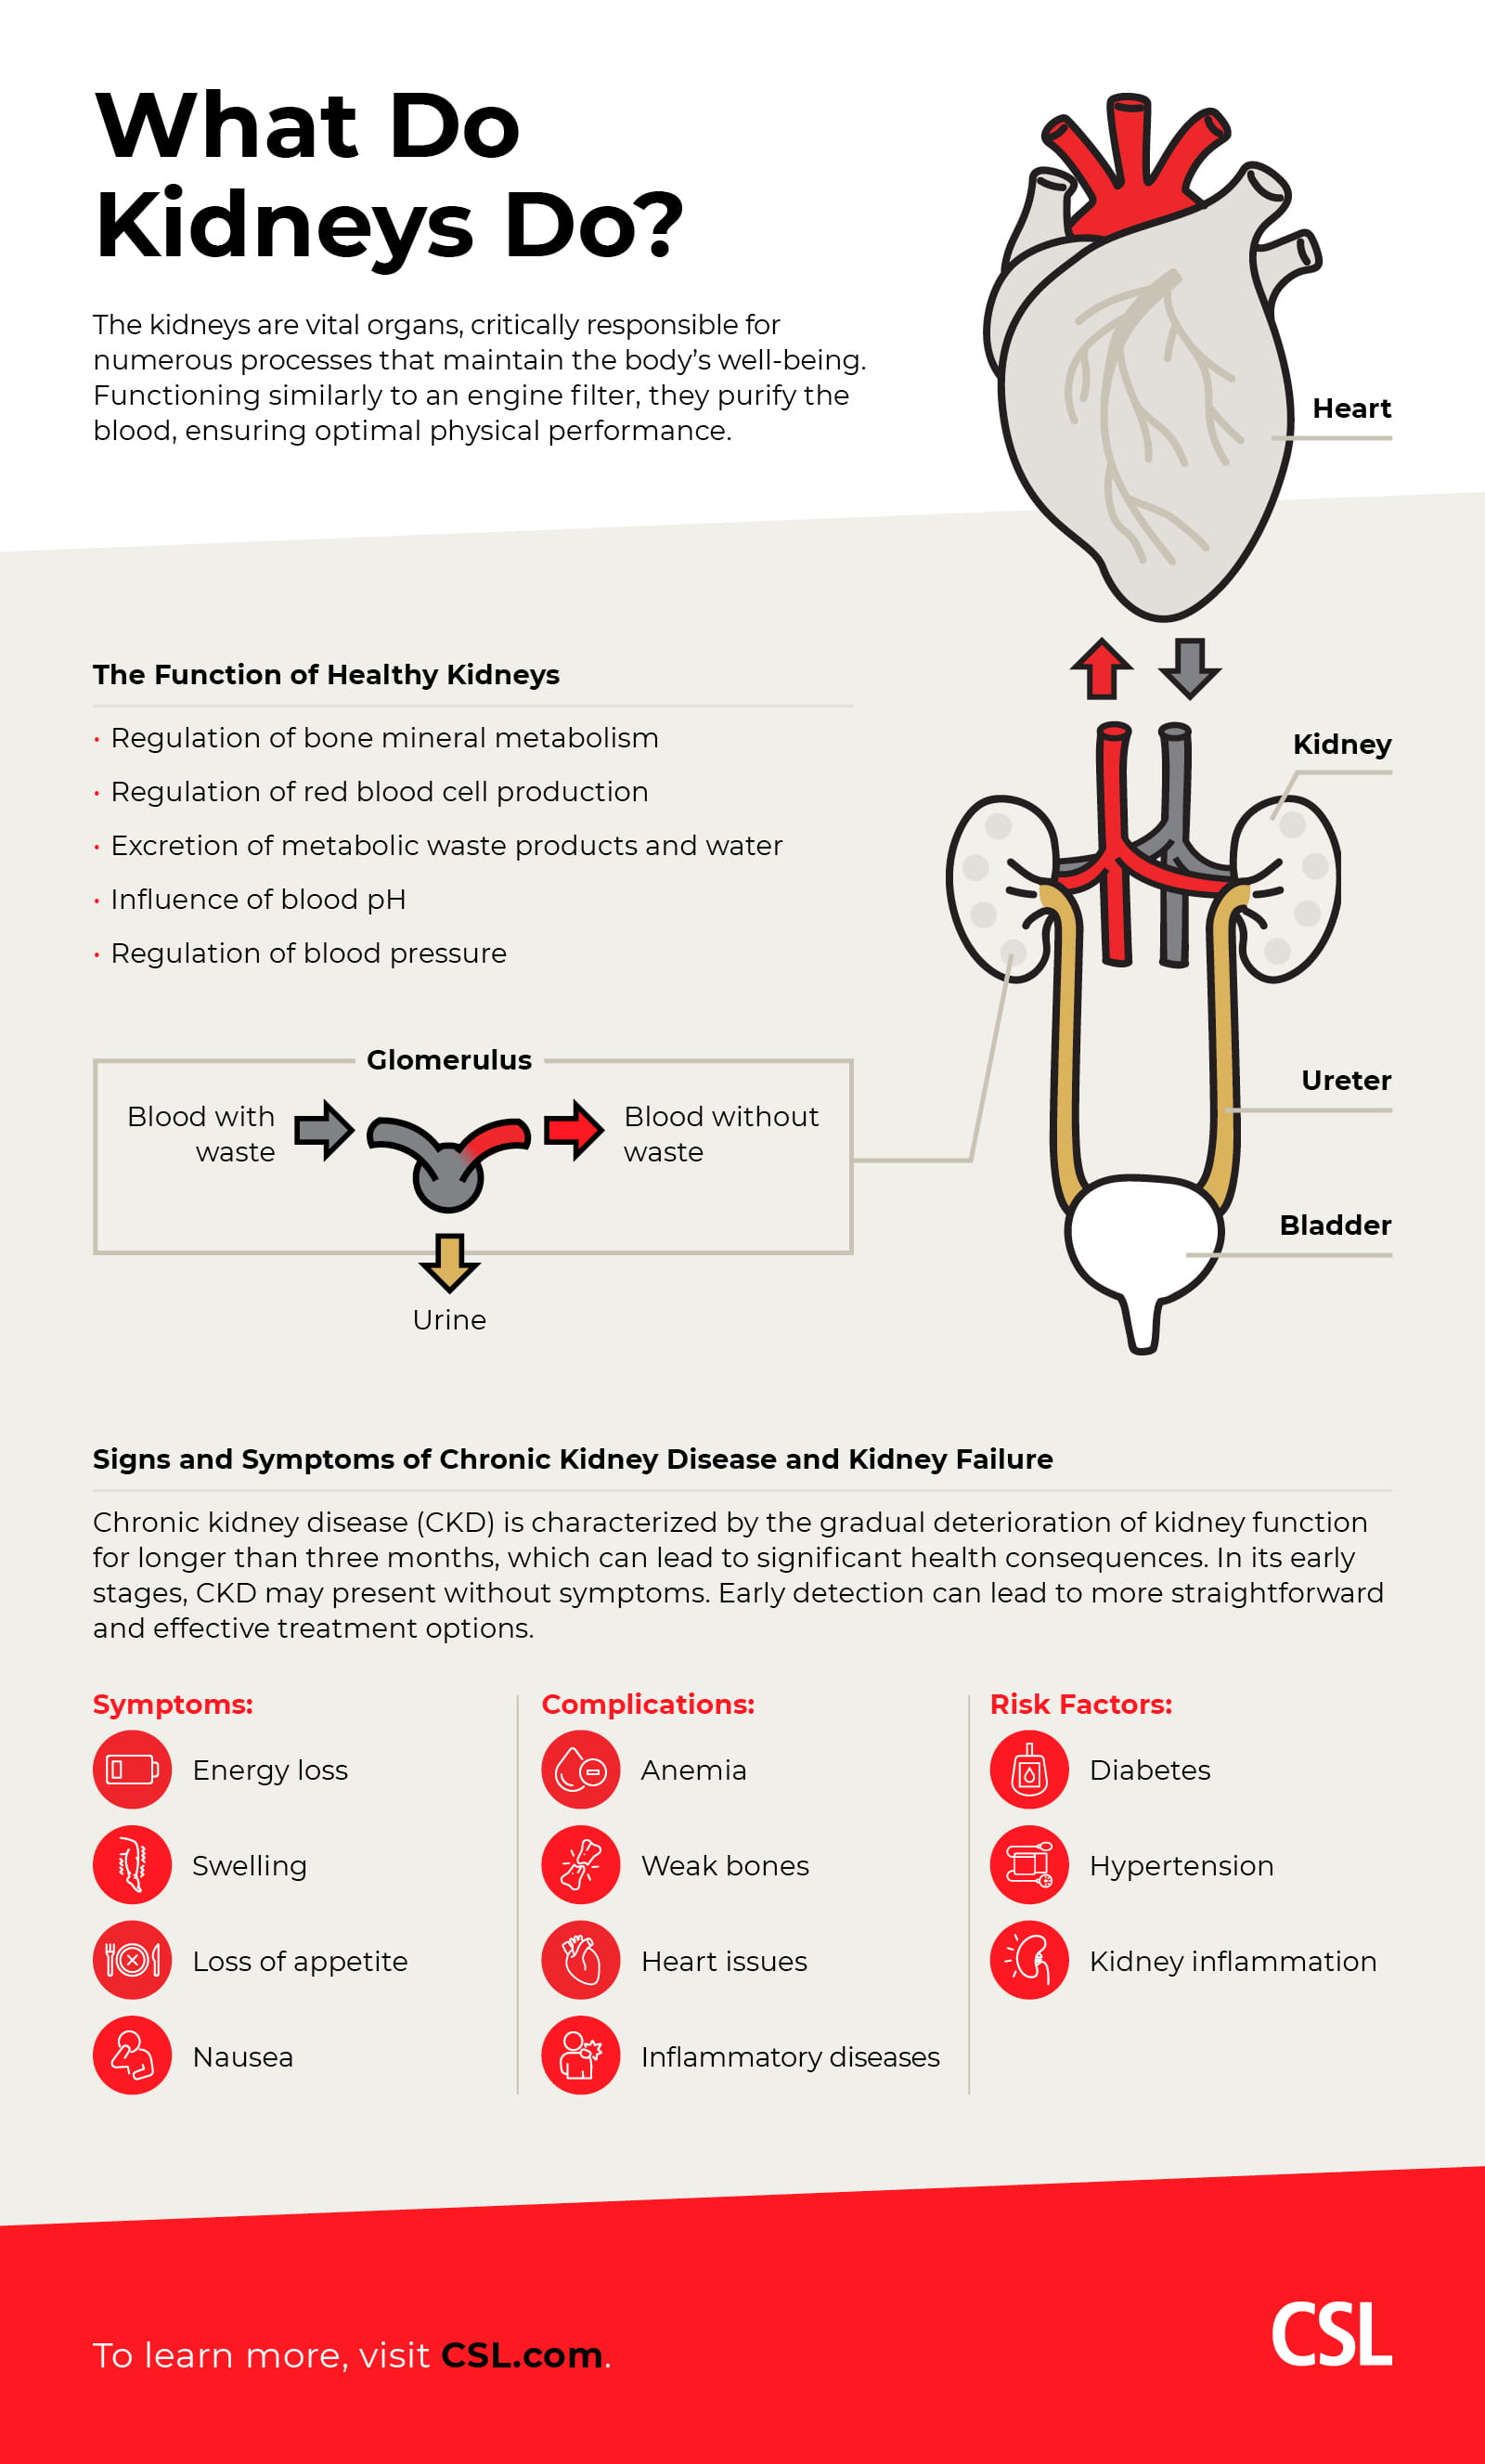 What Do Kidneys Do? An illustration explaining kidney function and symptoms of kidney problems